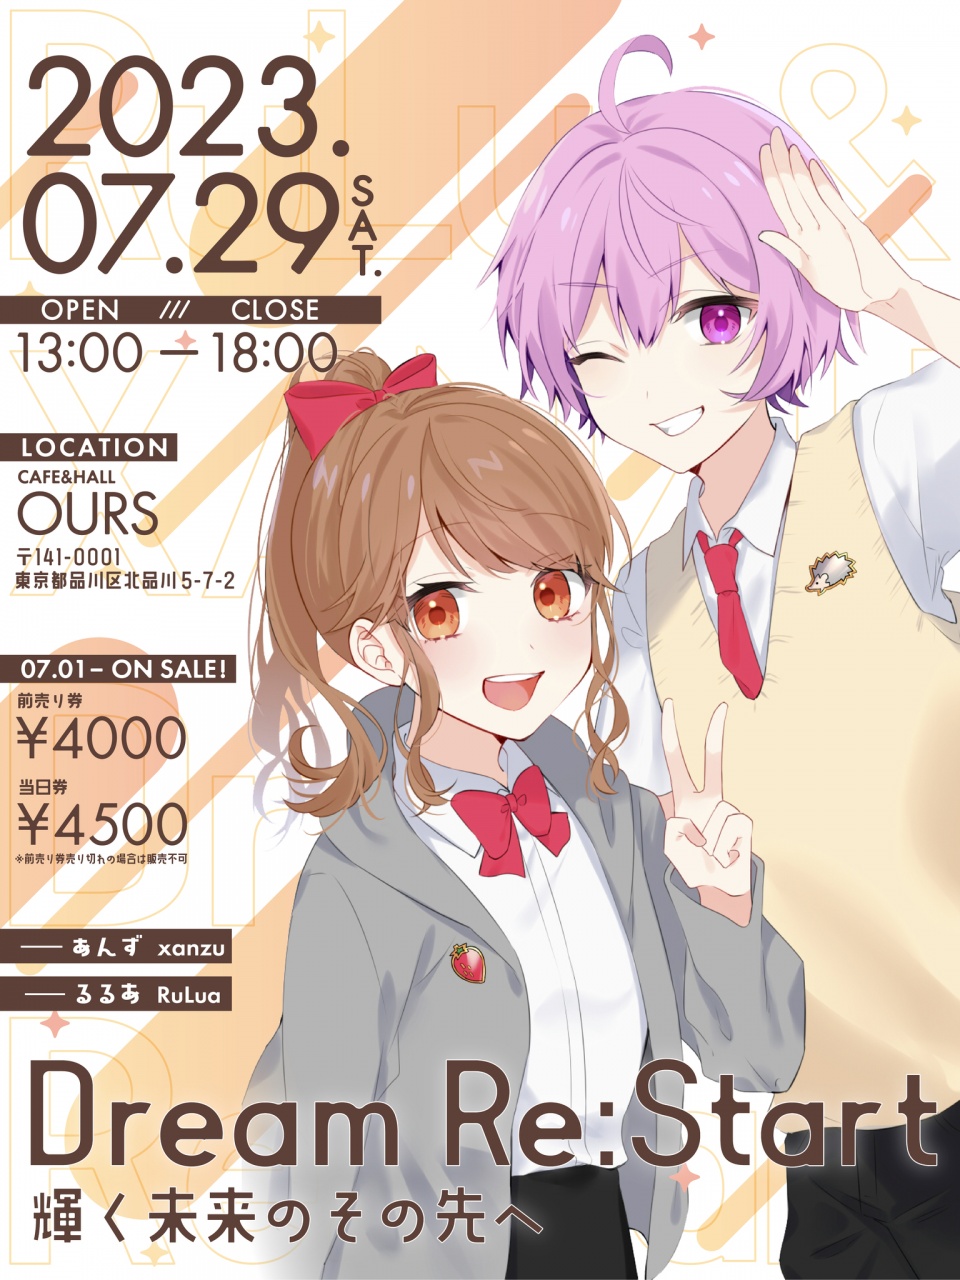 \\ 🦔👑 07/29 Dream Re:Start 🐰🍓//
